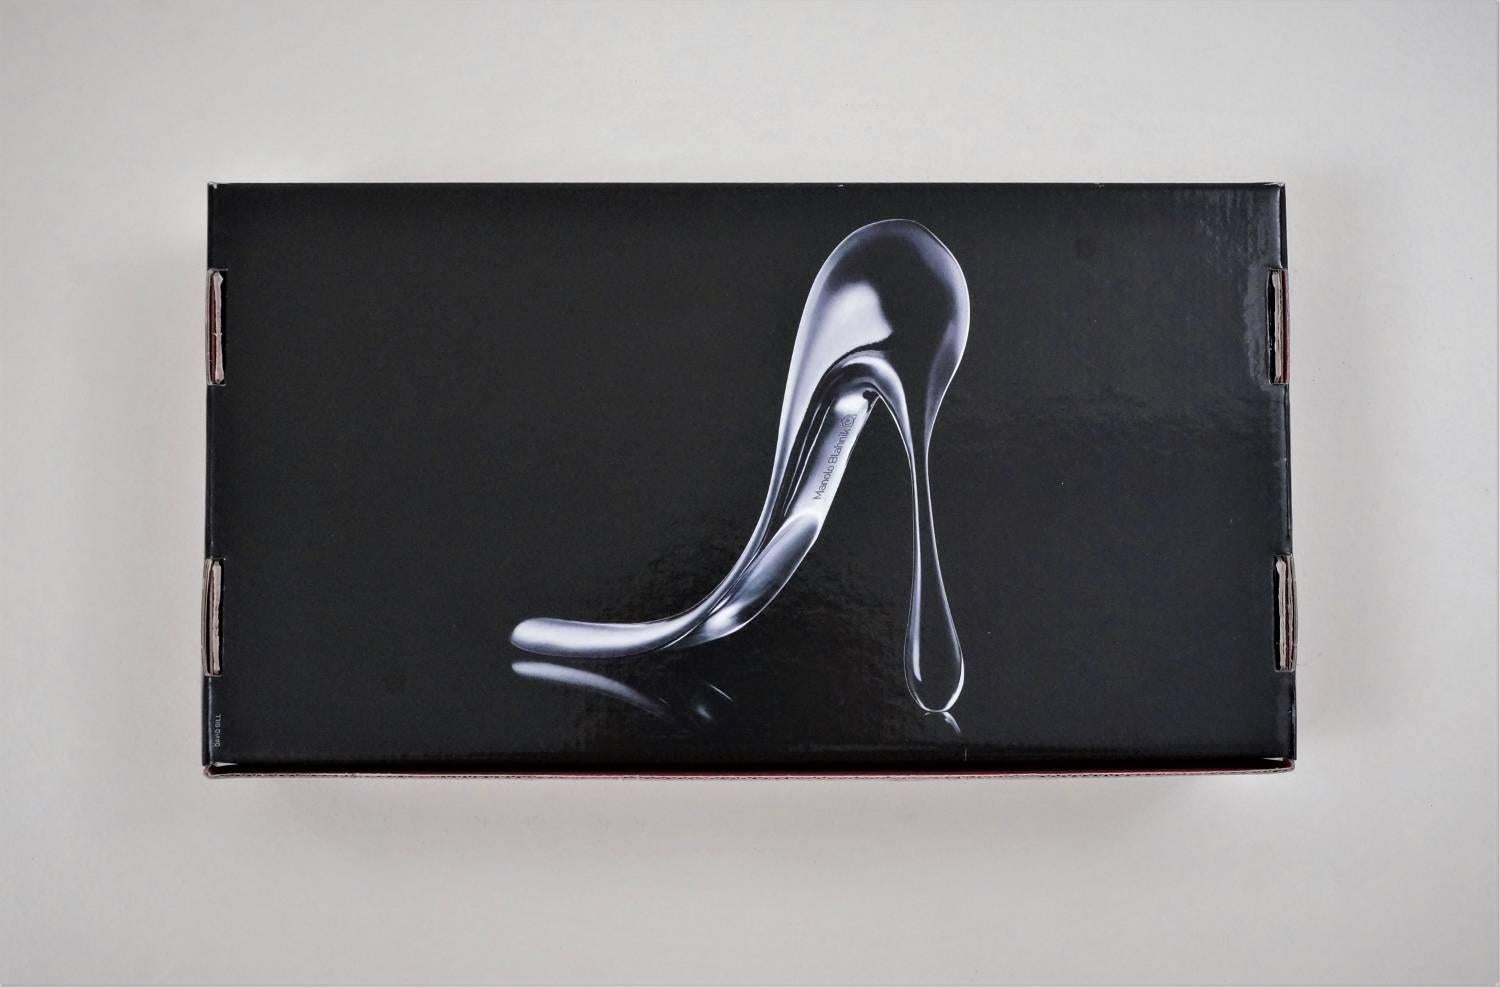 Aluminum Manolo Blahnik Shoe Horn Aluminium with Original Box, 2004, English